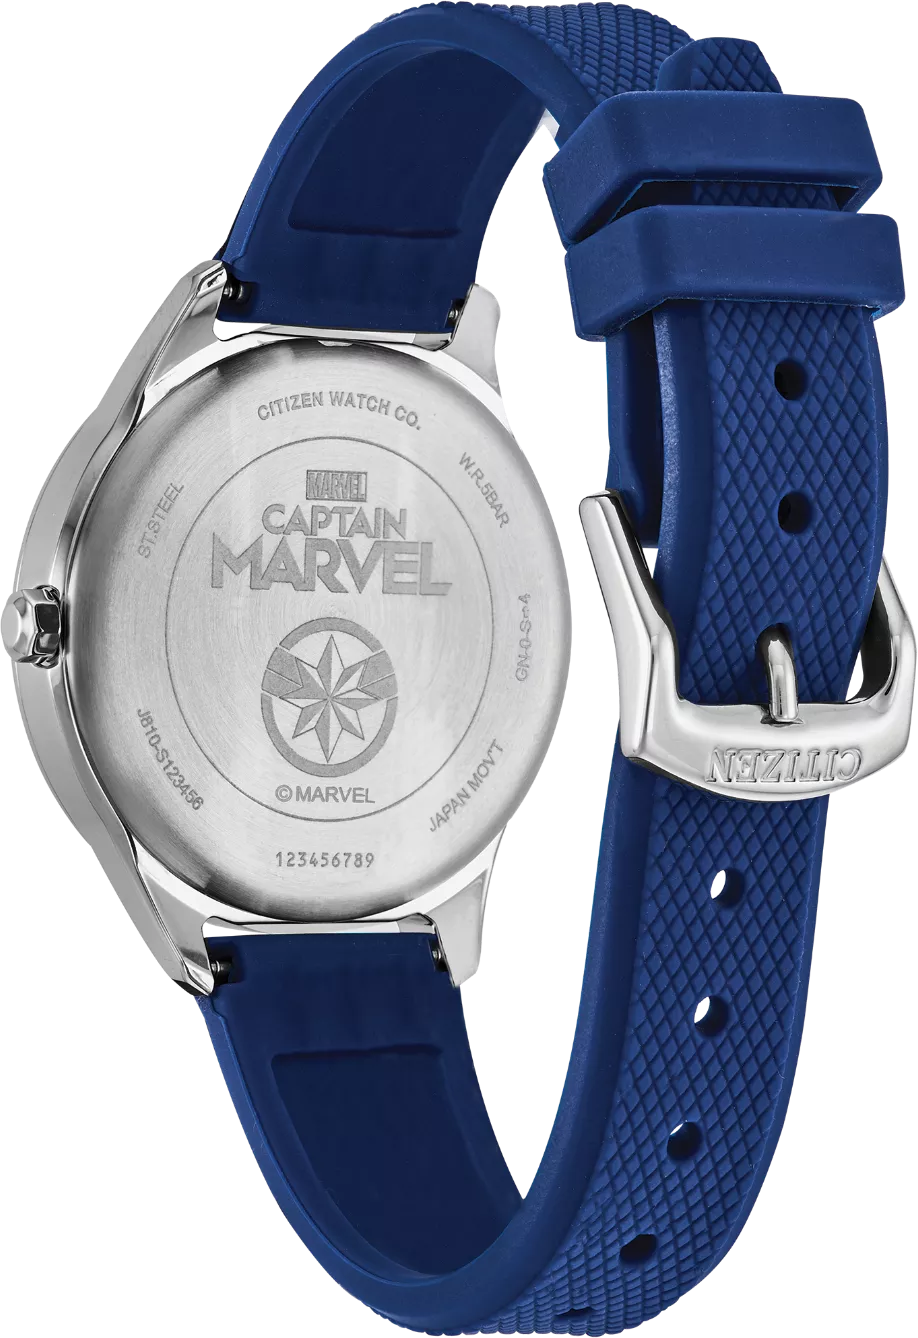 Citizen Captain Marvel Women's Watch 37mm